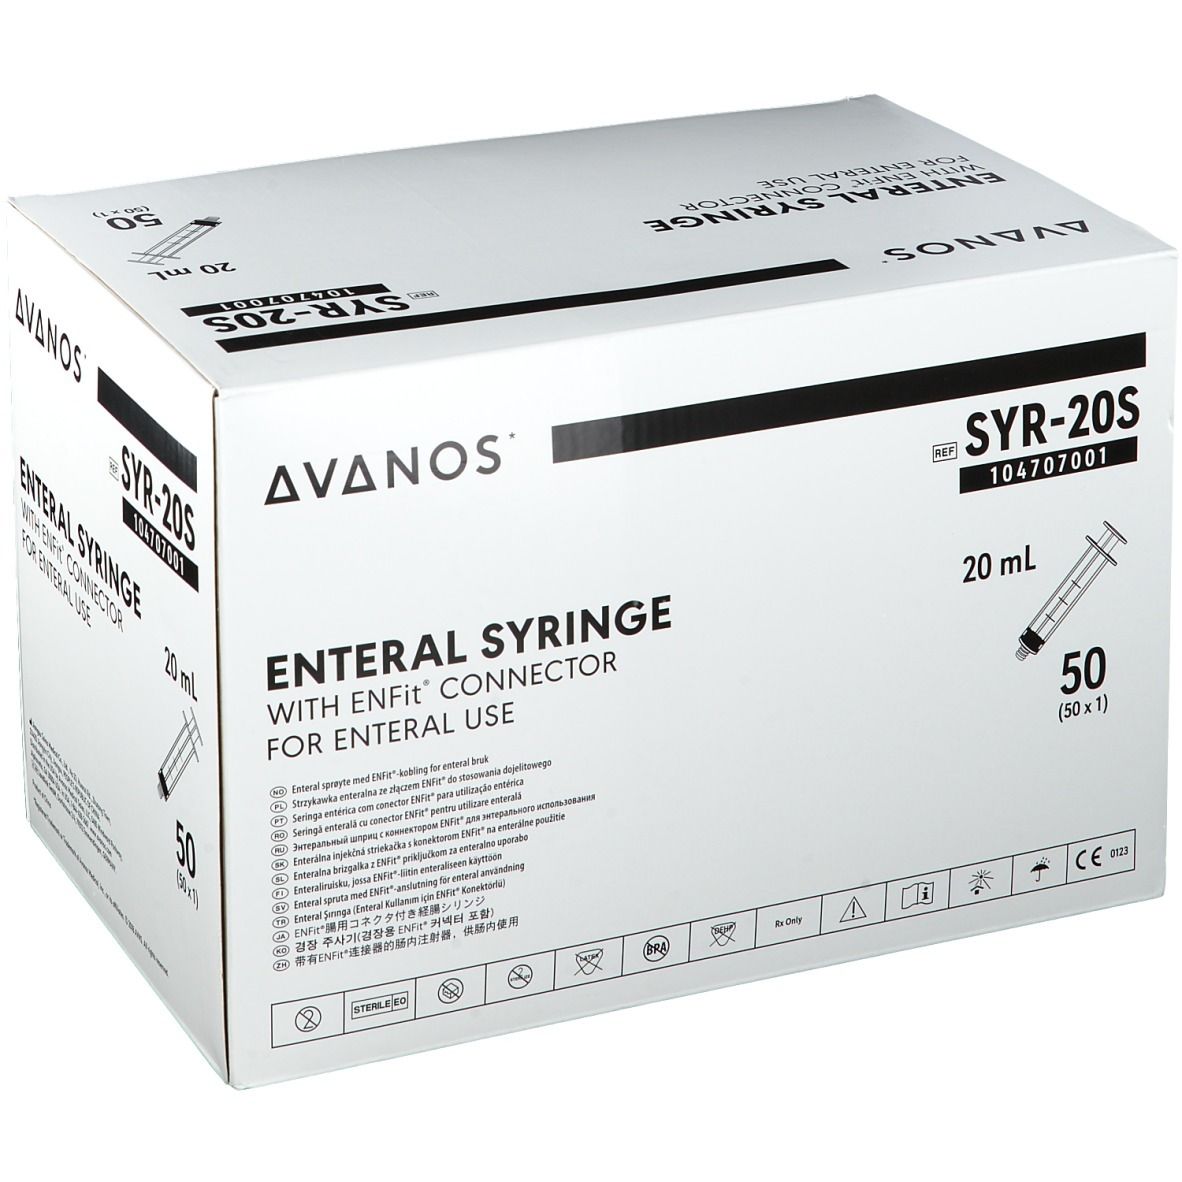 AVANOS ENTERAL SYRINGE Spritze 20 ml